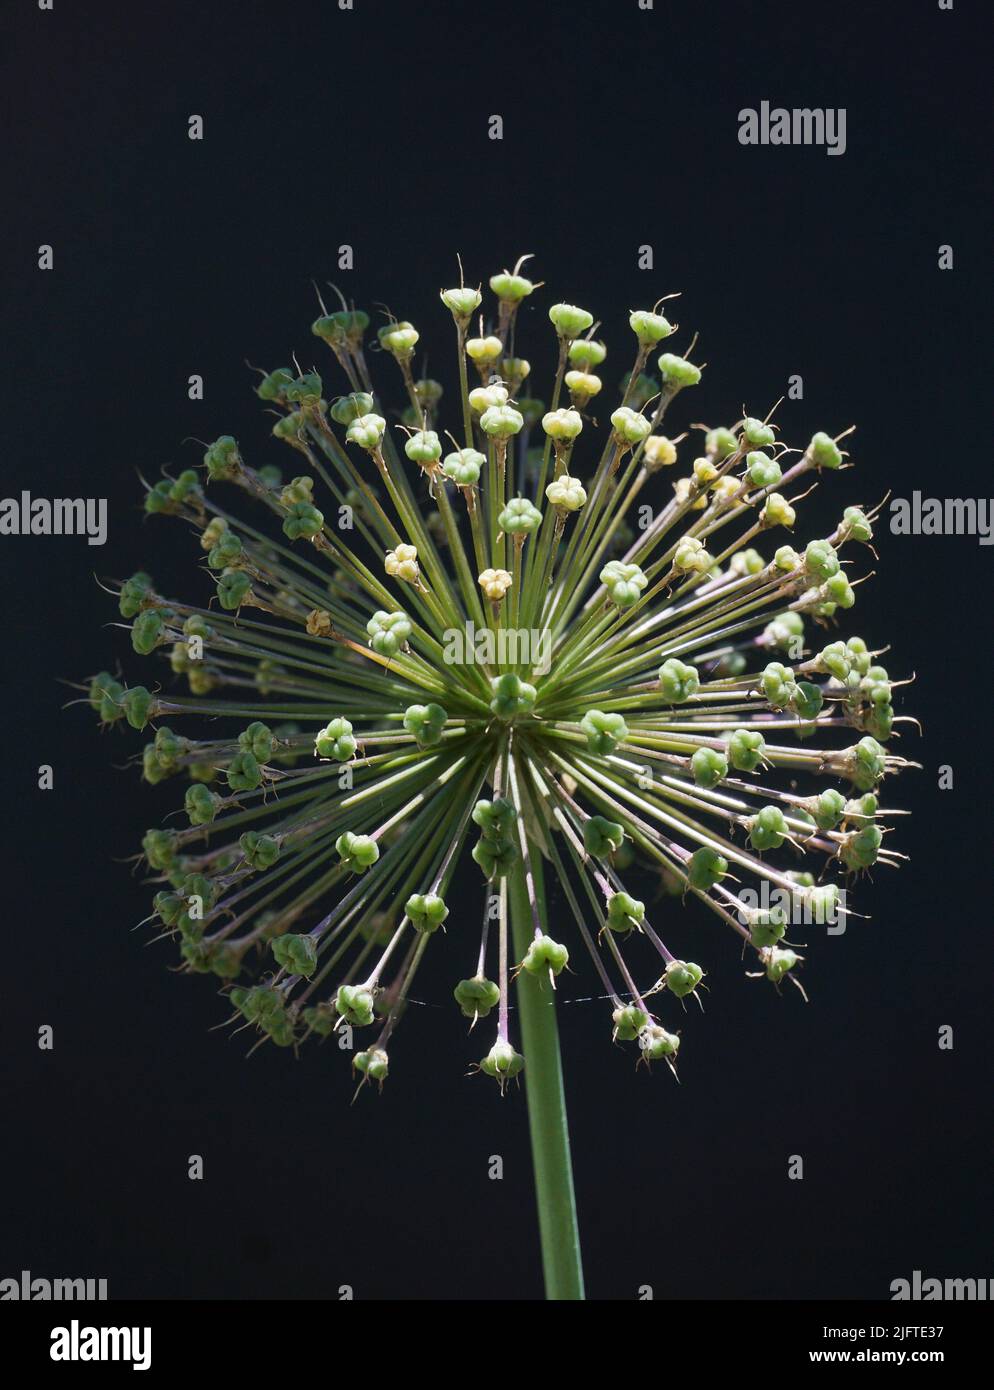 Alium flower head Stock Photo